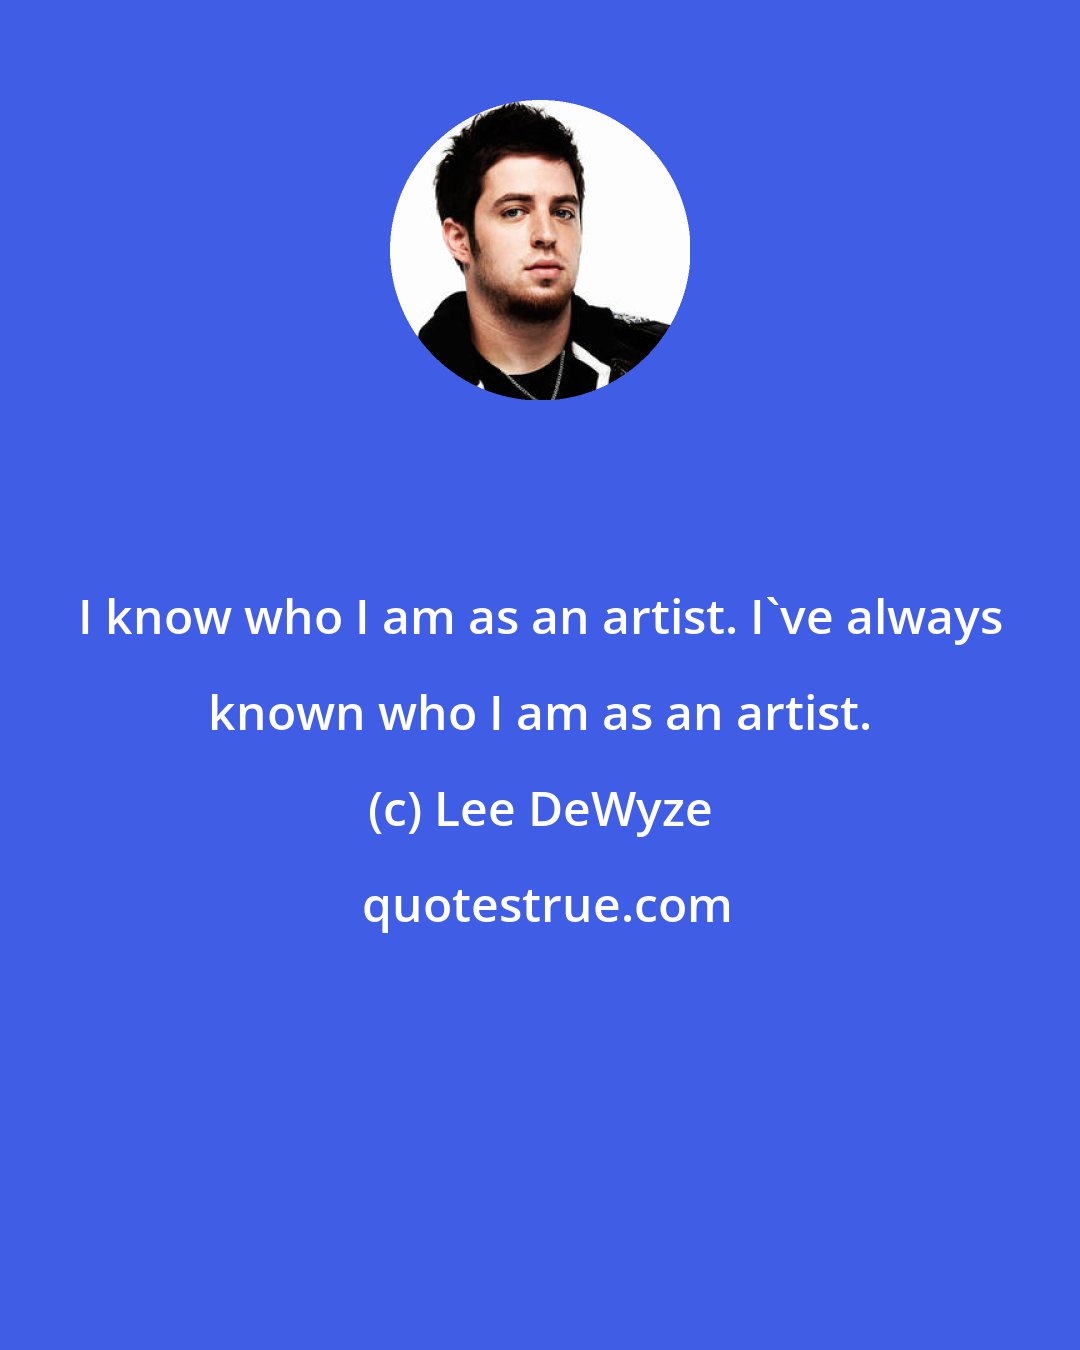 Lee DeWyze: I know who I am as an artist. I've always known who I am as an artist.